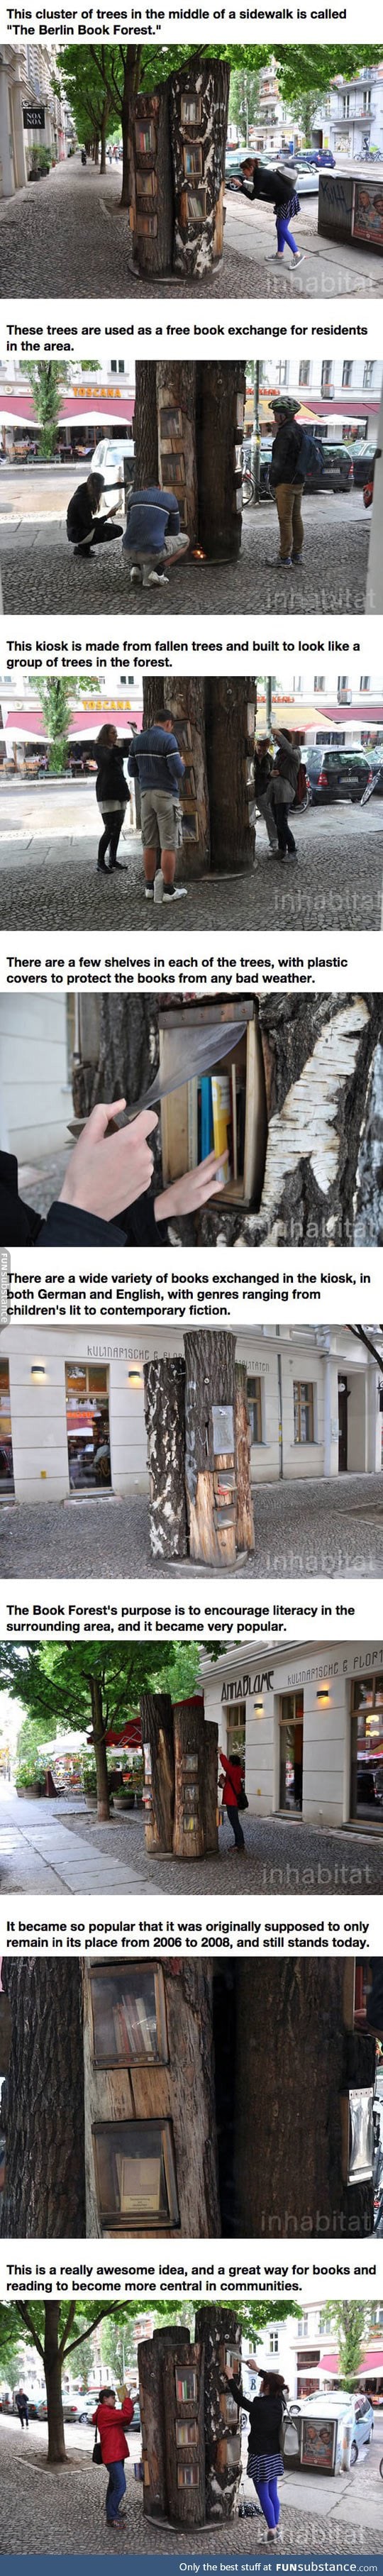 Book forest in berlin